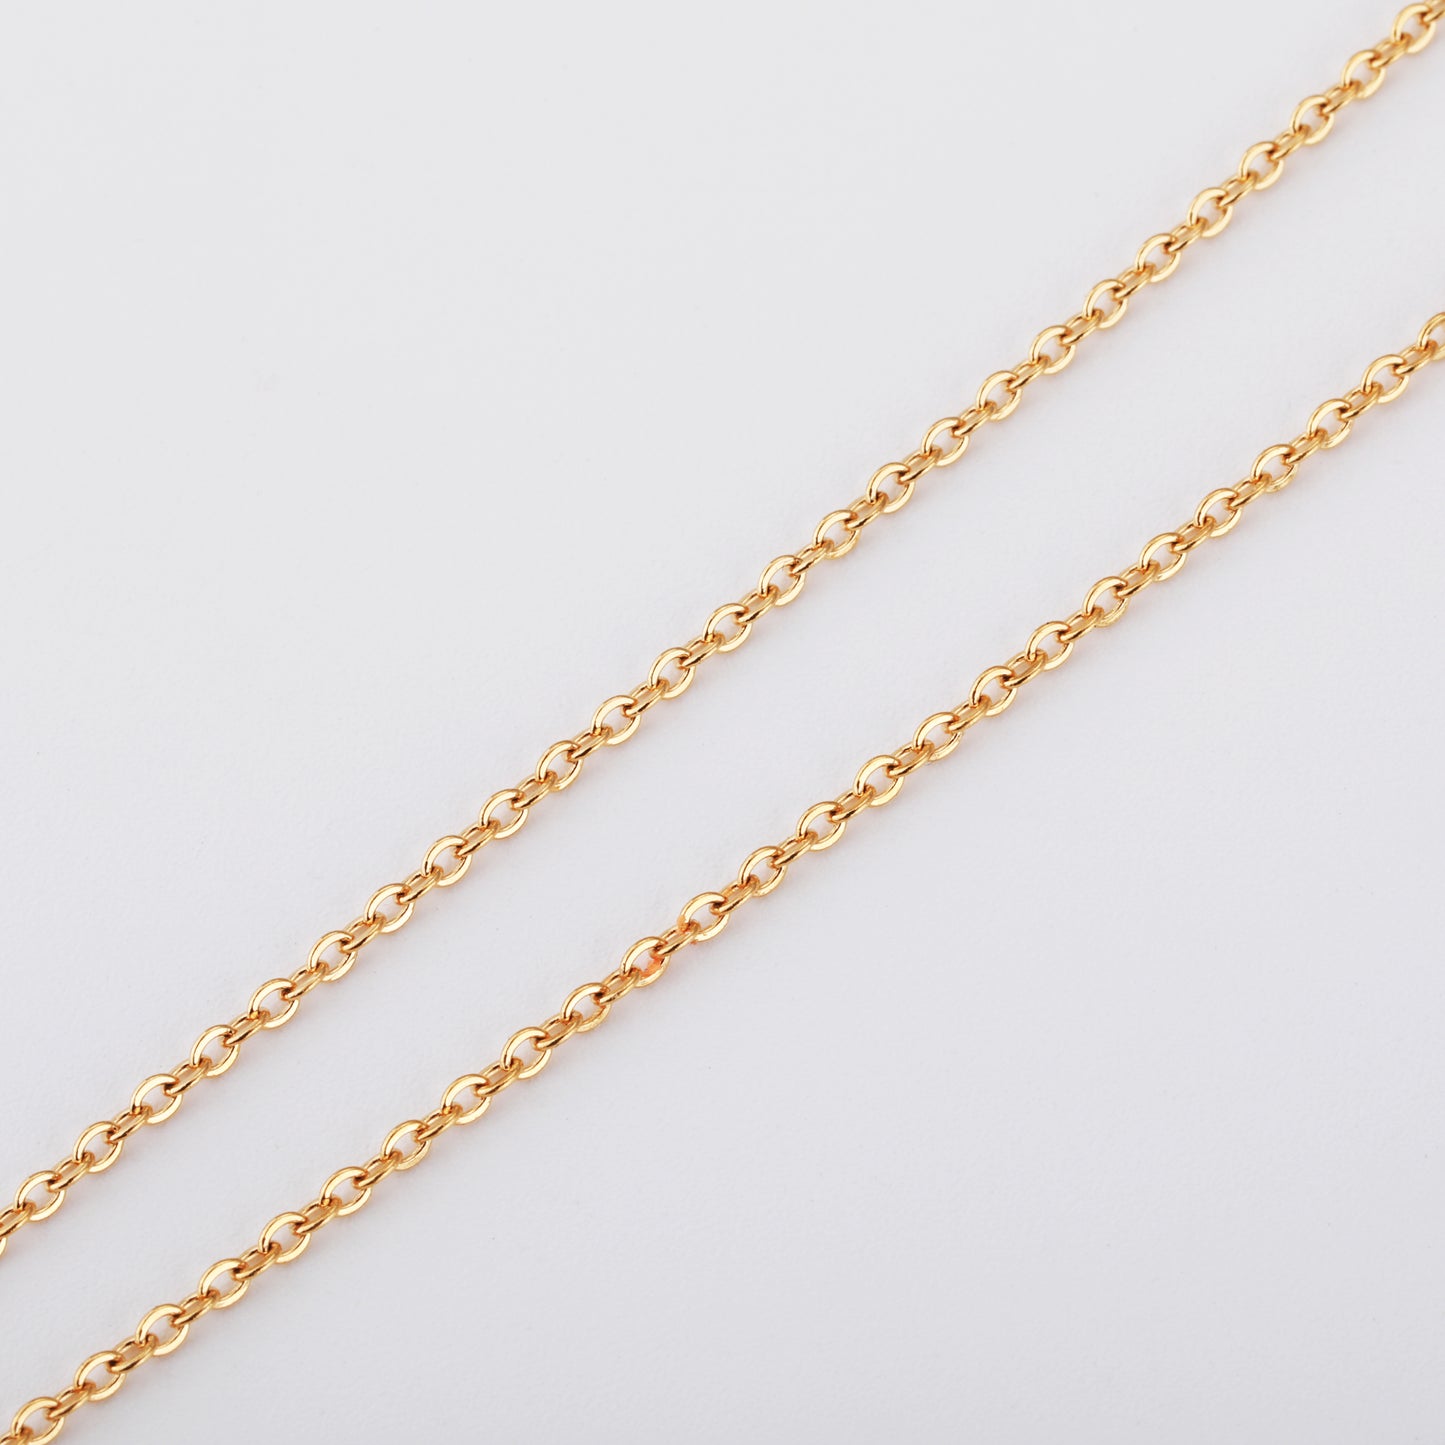 Darjali Jewelry Patience Necklace 18K Gold Chain